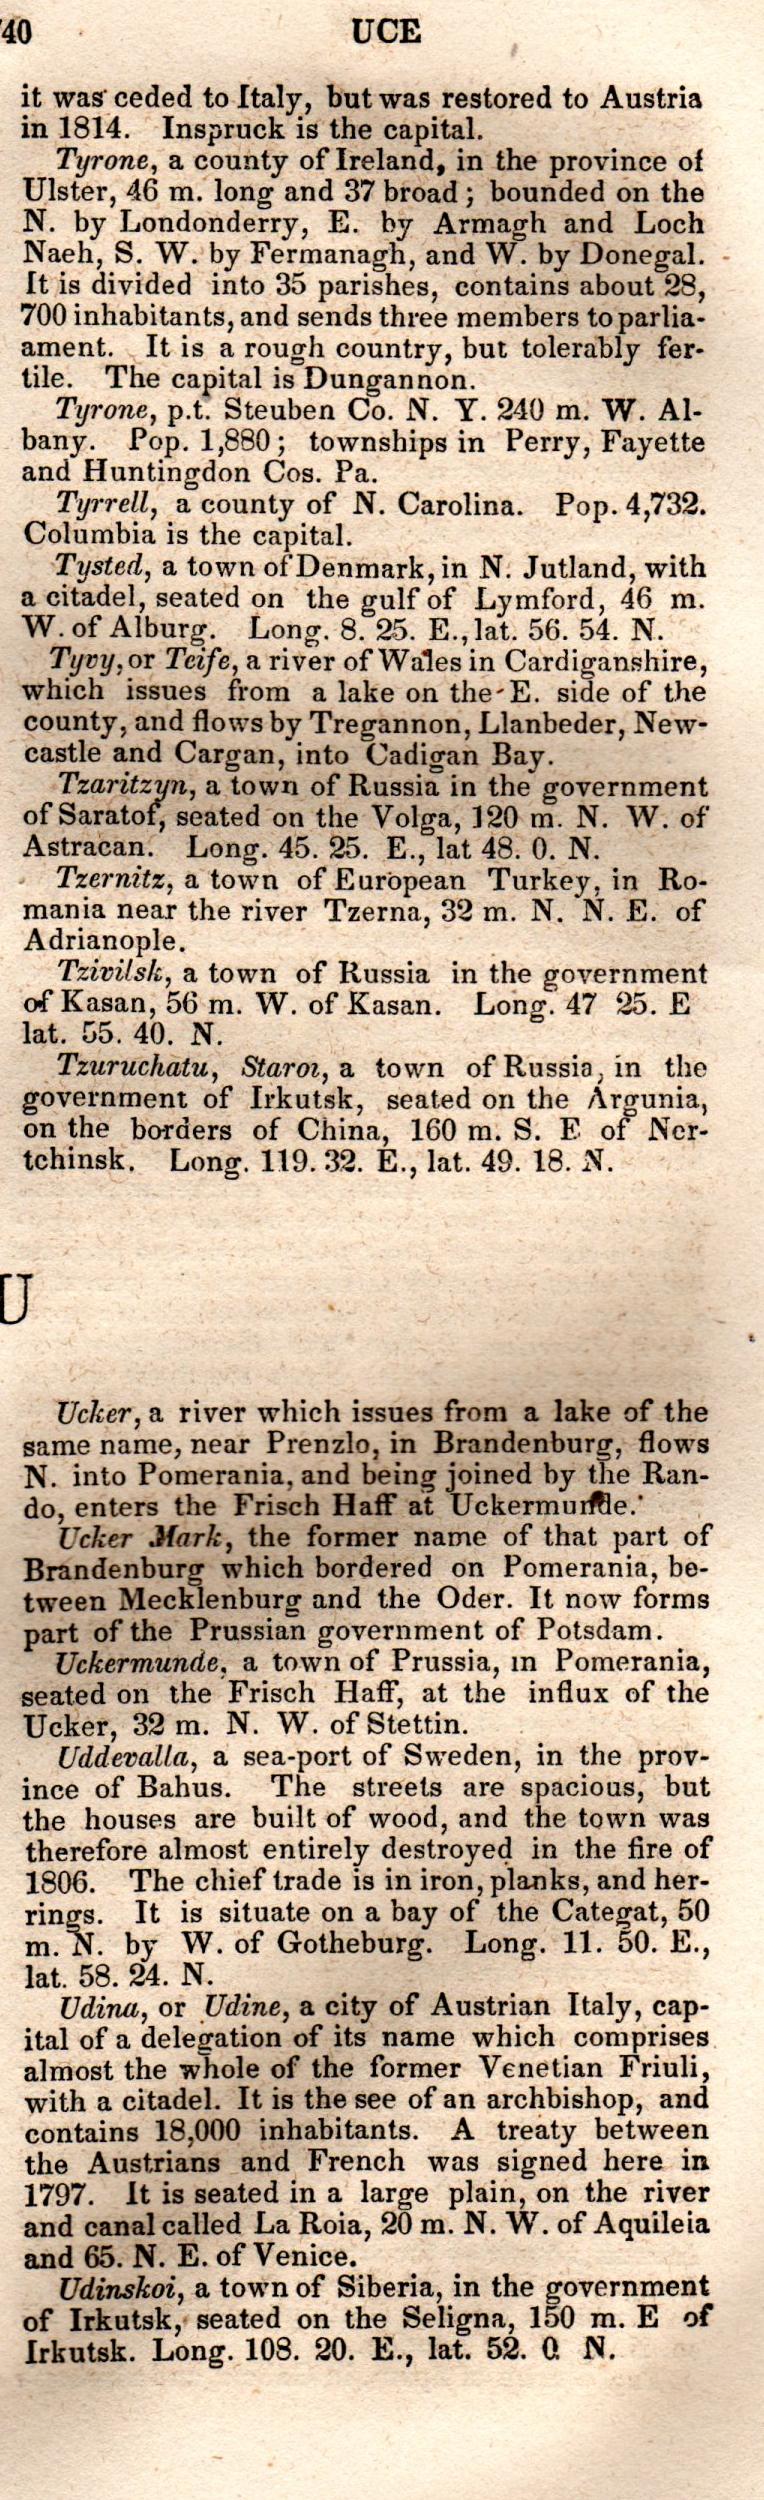 Brookes’ Universal Gazetteer (1850), Page 740 Right Column